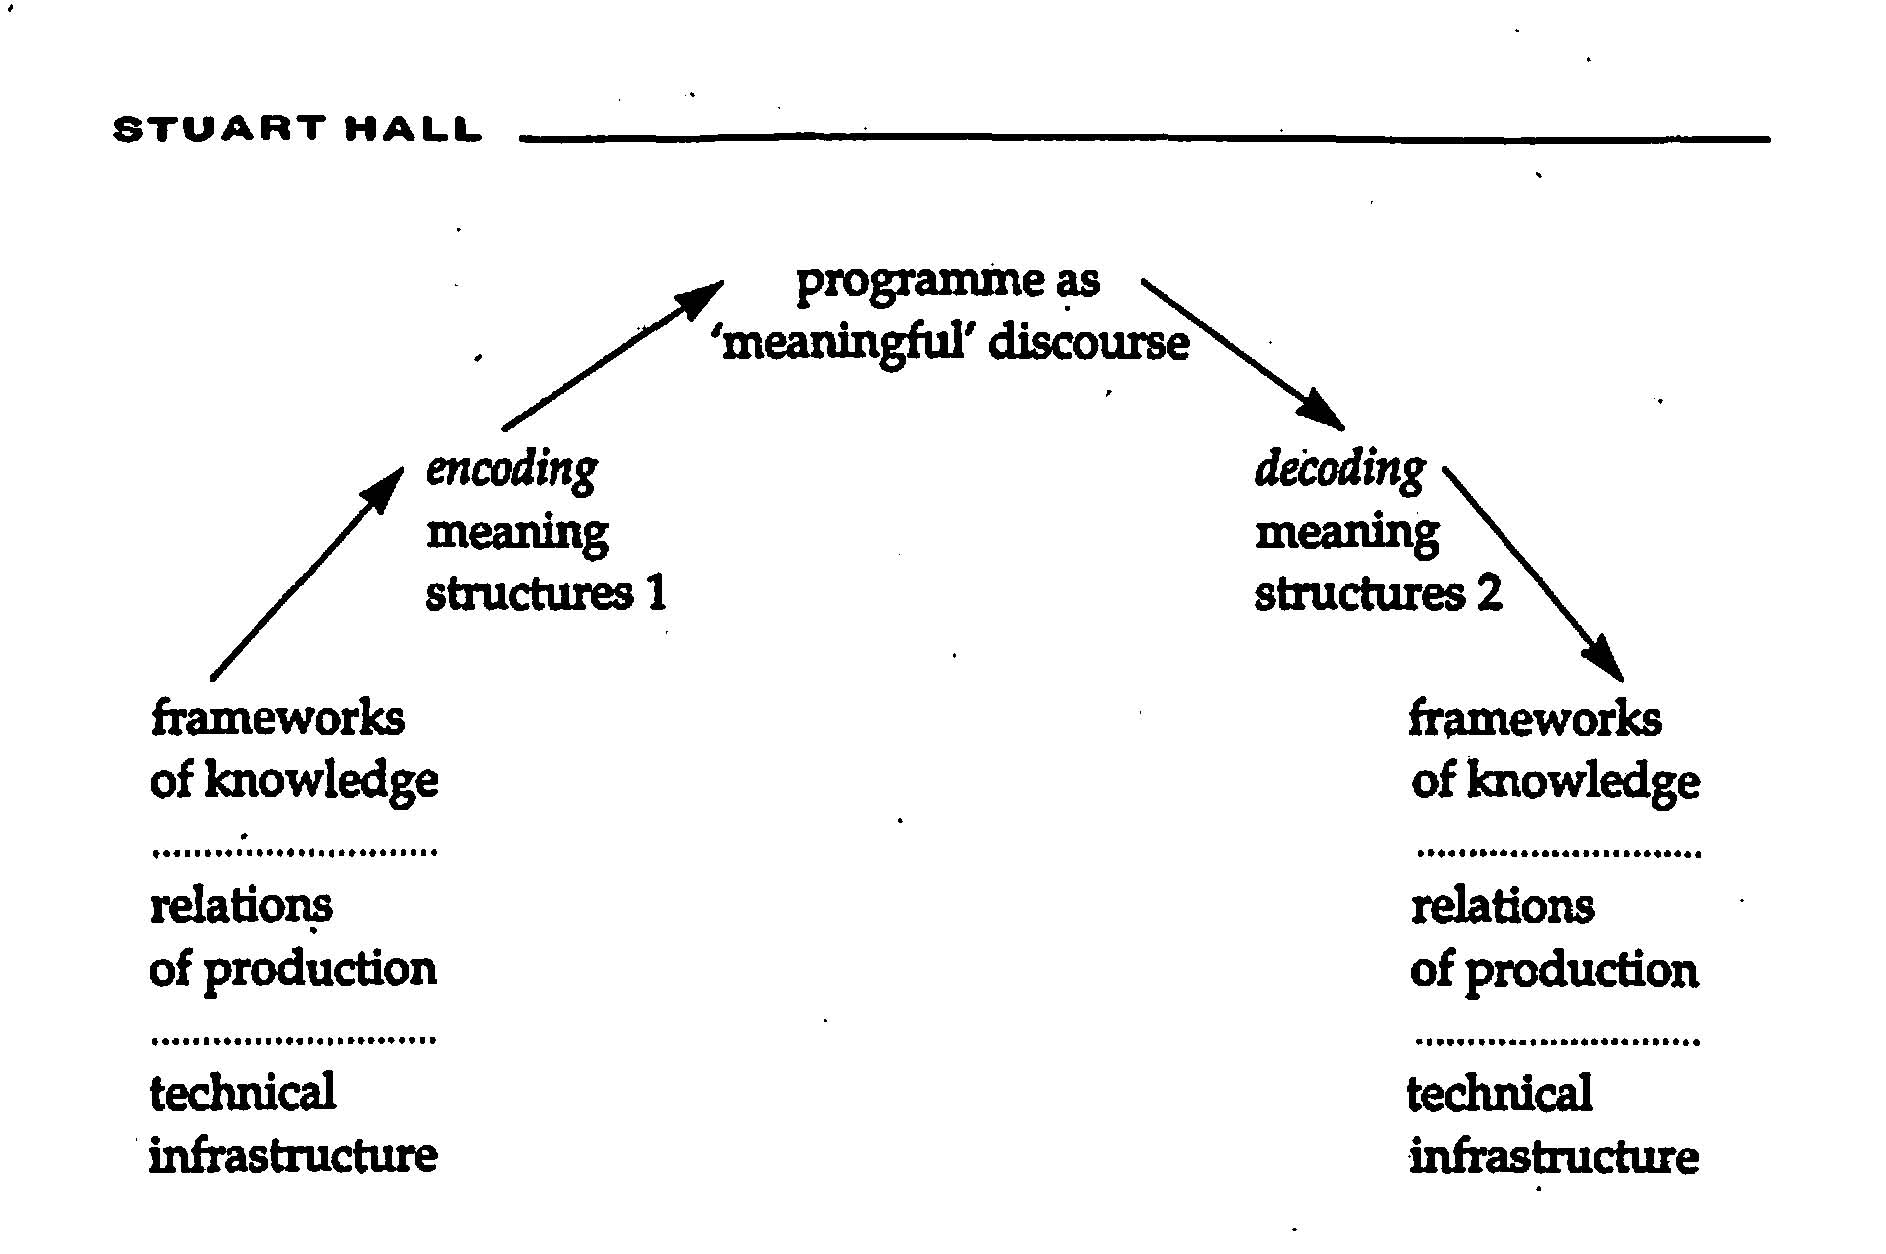 http://culturalstudies101.files.wordpress.com/2013/02/hall_encoding-decoding-diagram.jpg